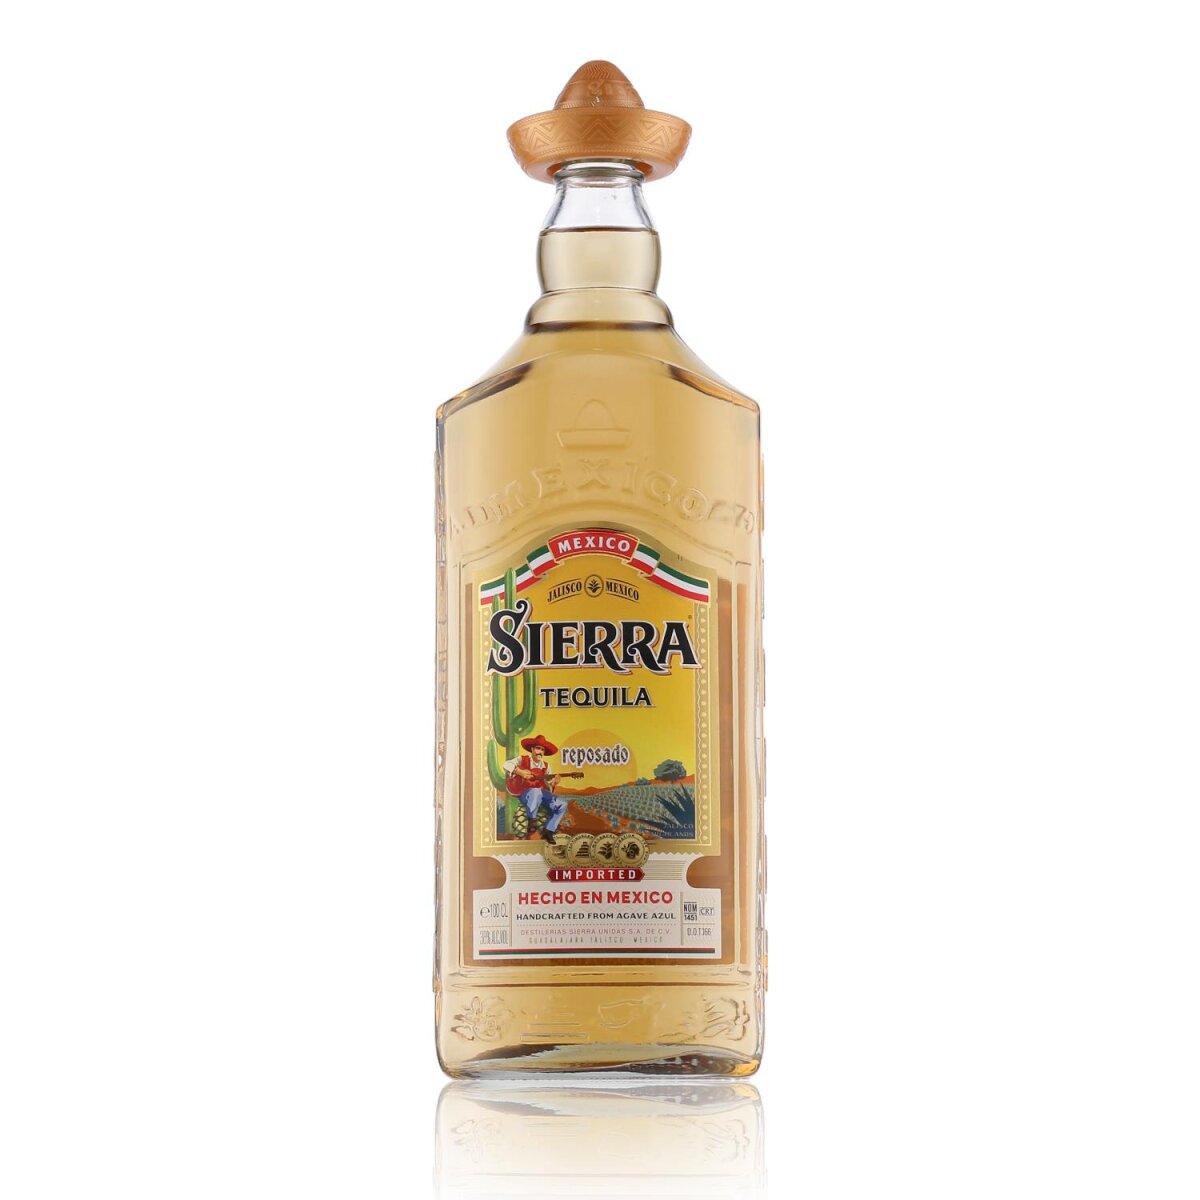 Sierra Tequila Reposado 38% Vol. 1l, 16,79 €